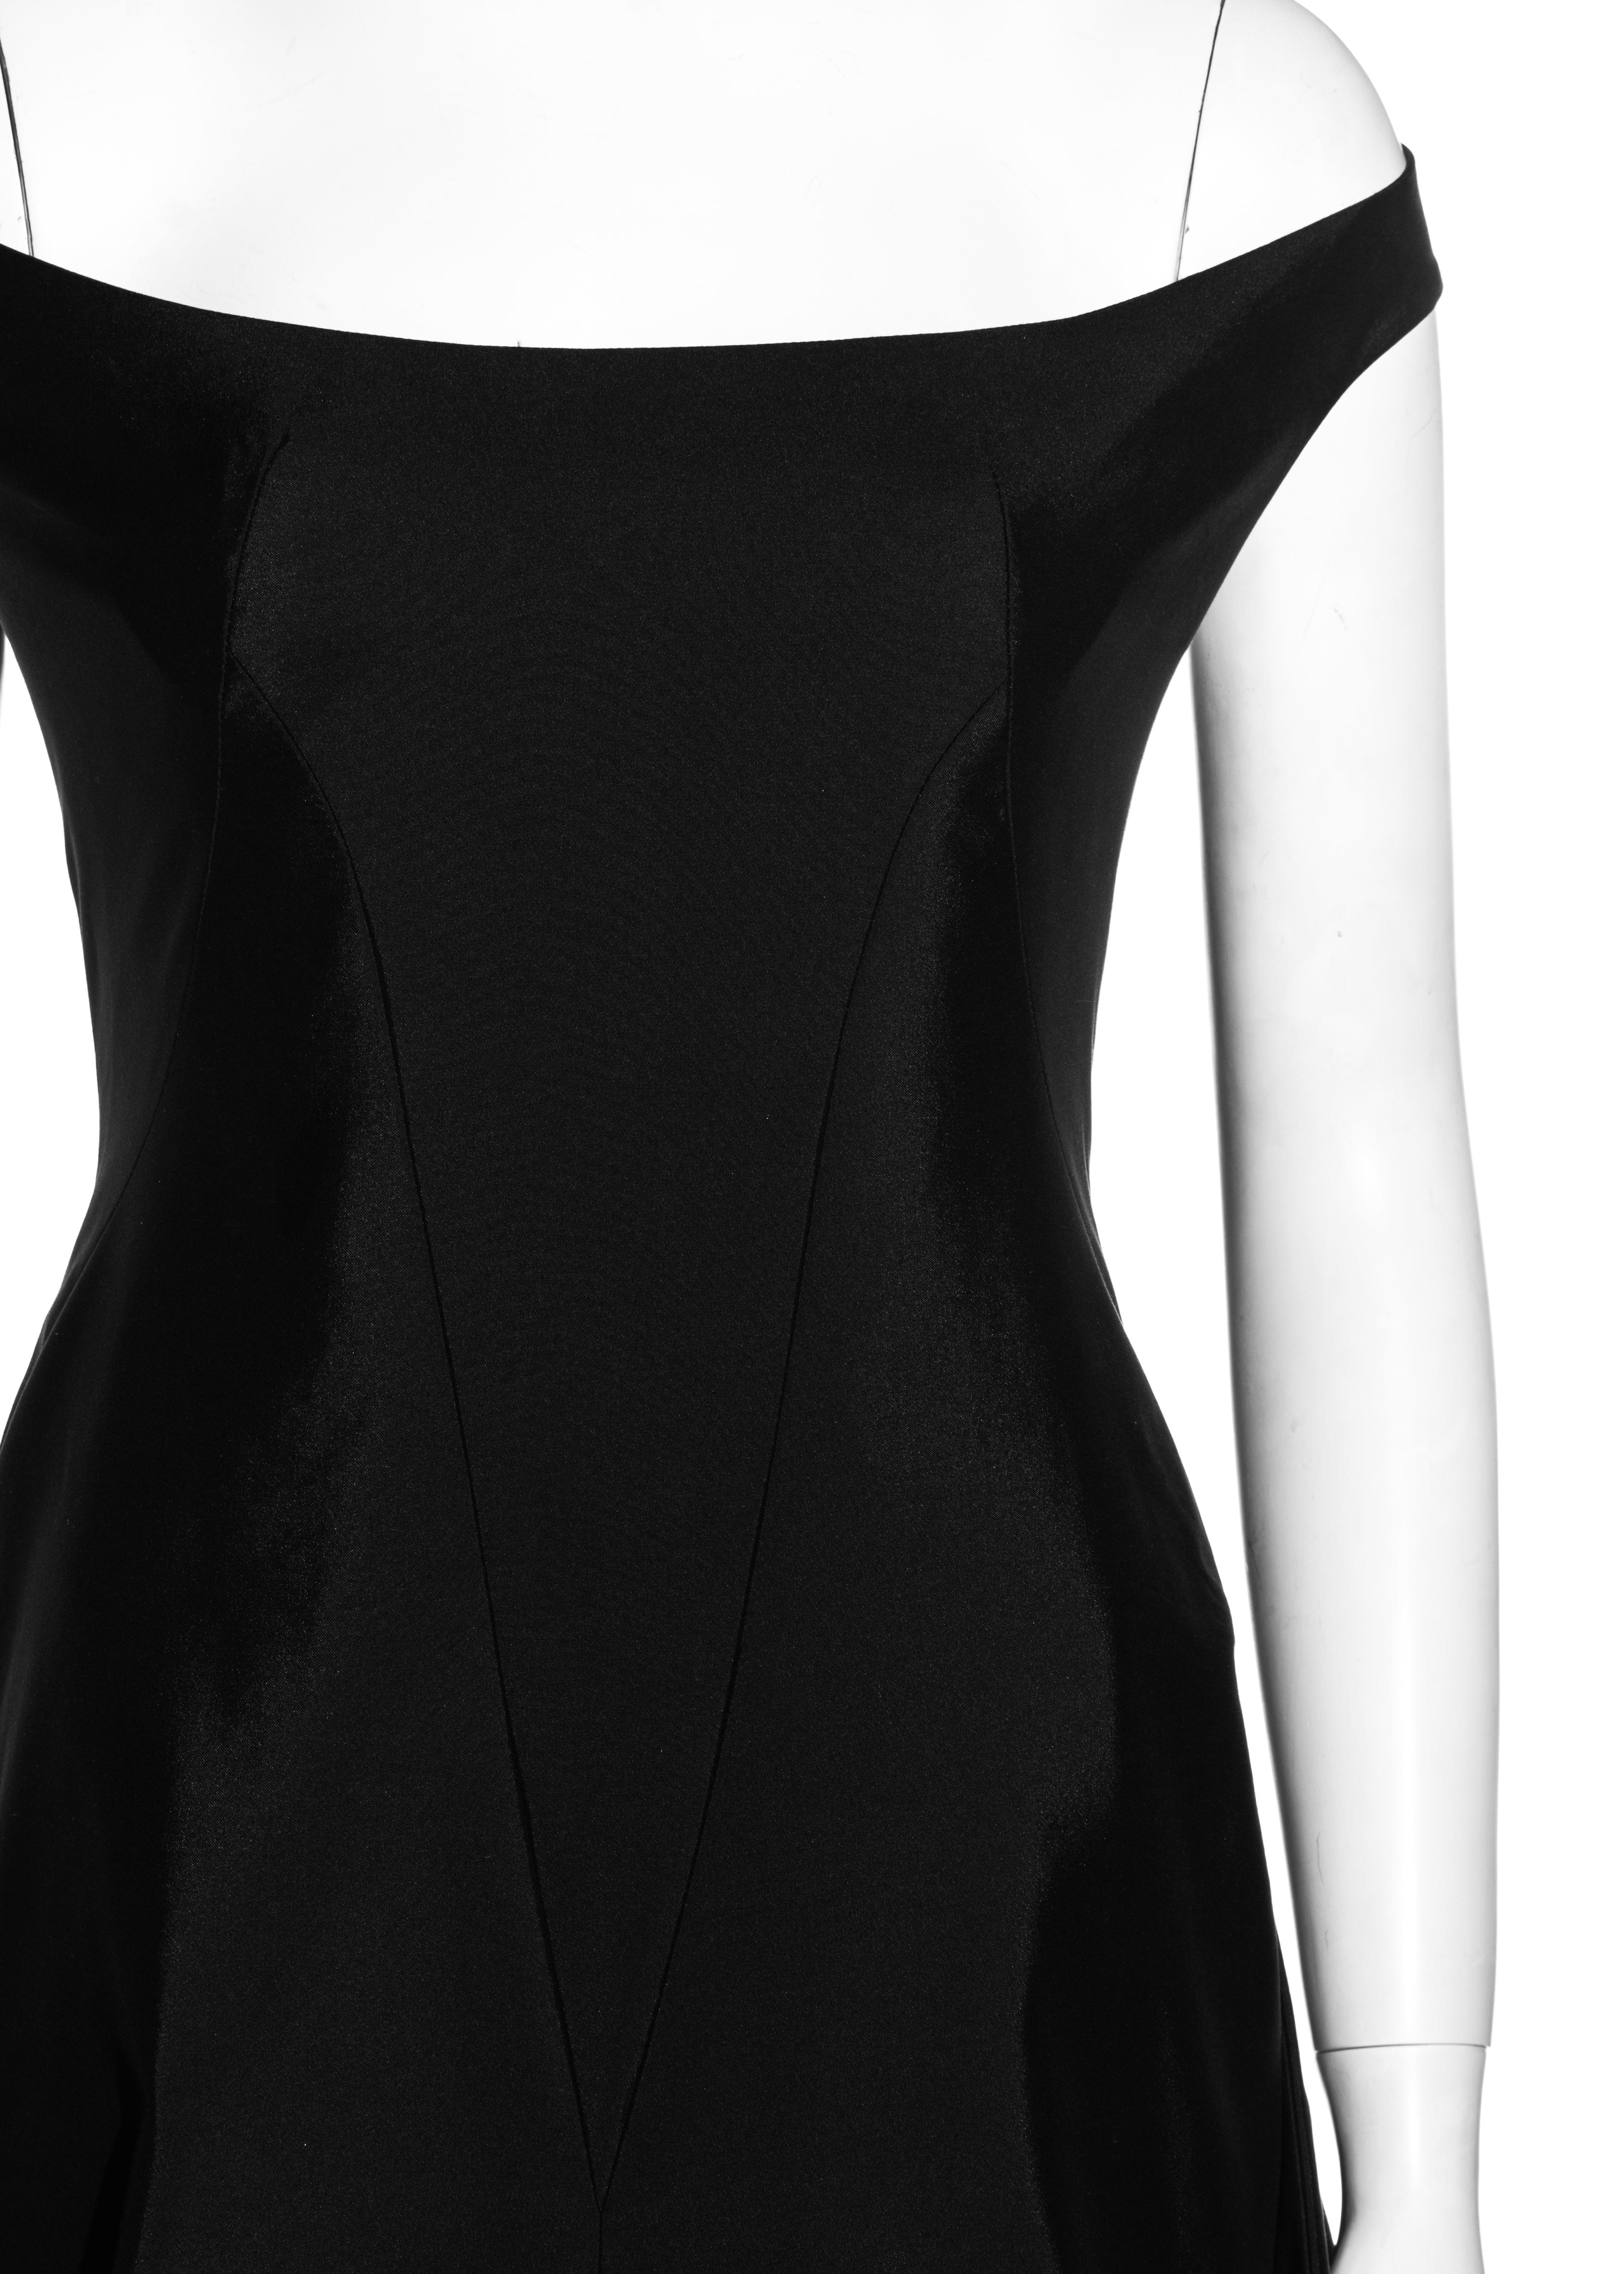 Women's Alexander McQueen black off-shoulder bustled evening dress, ss 2002 For Sale